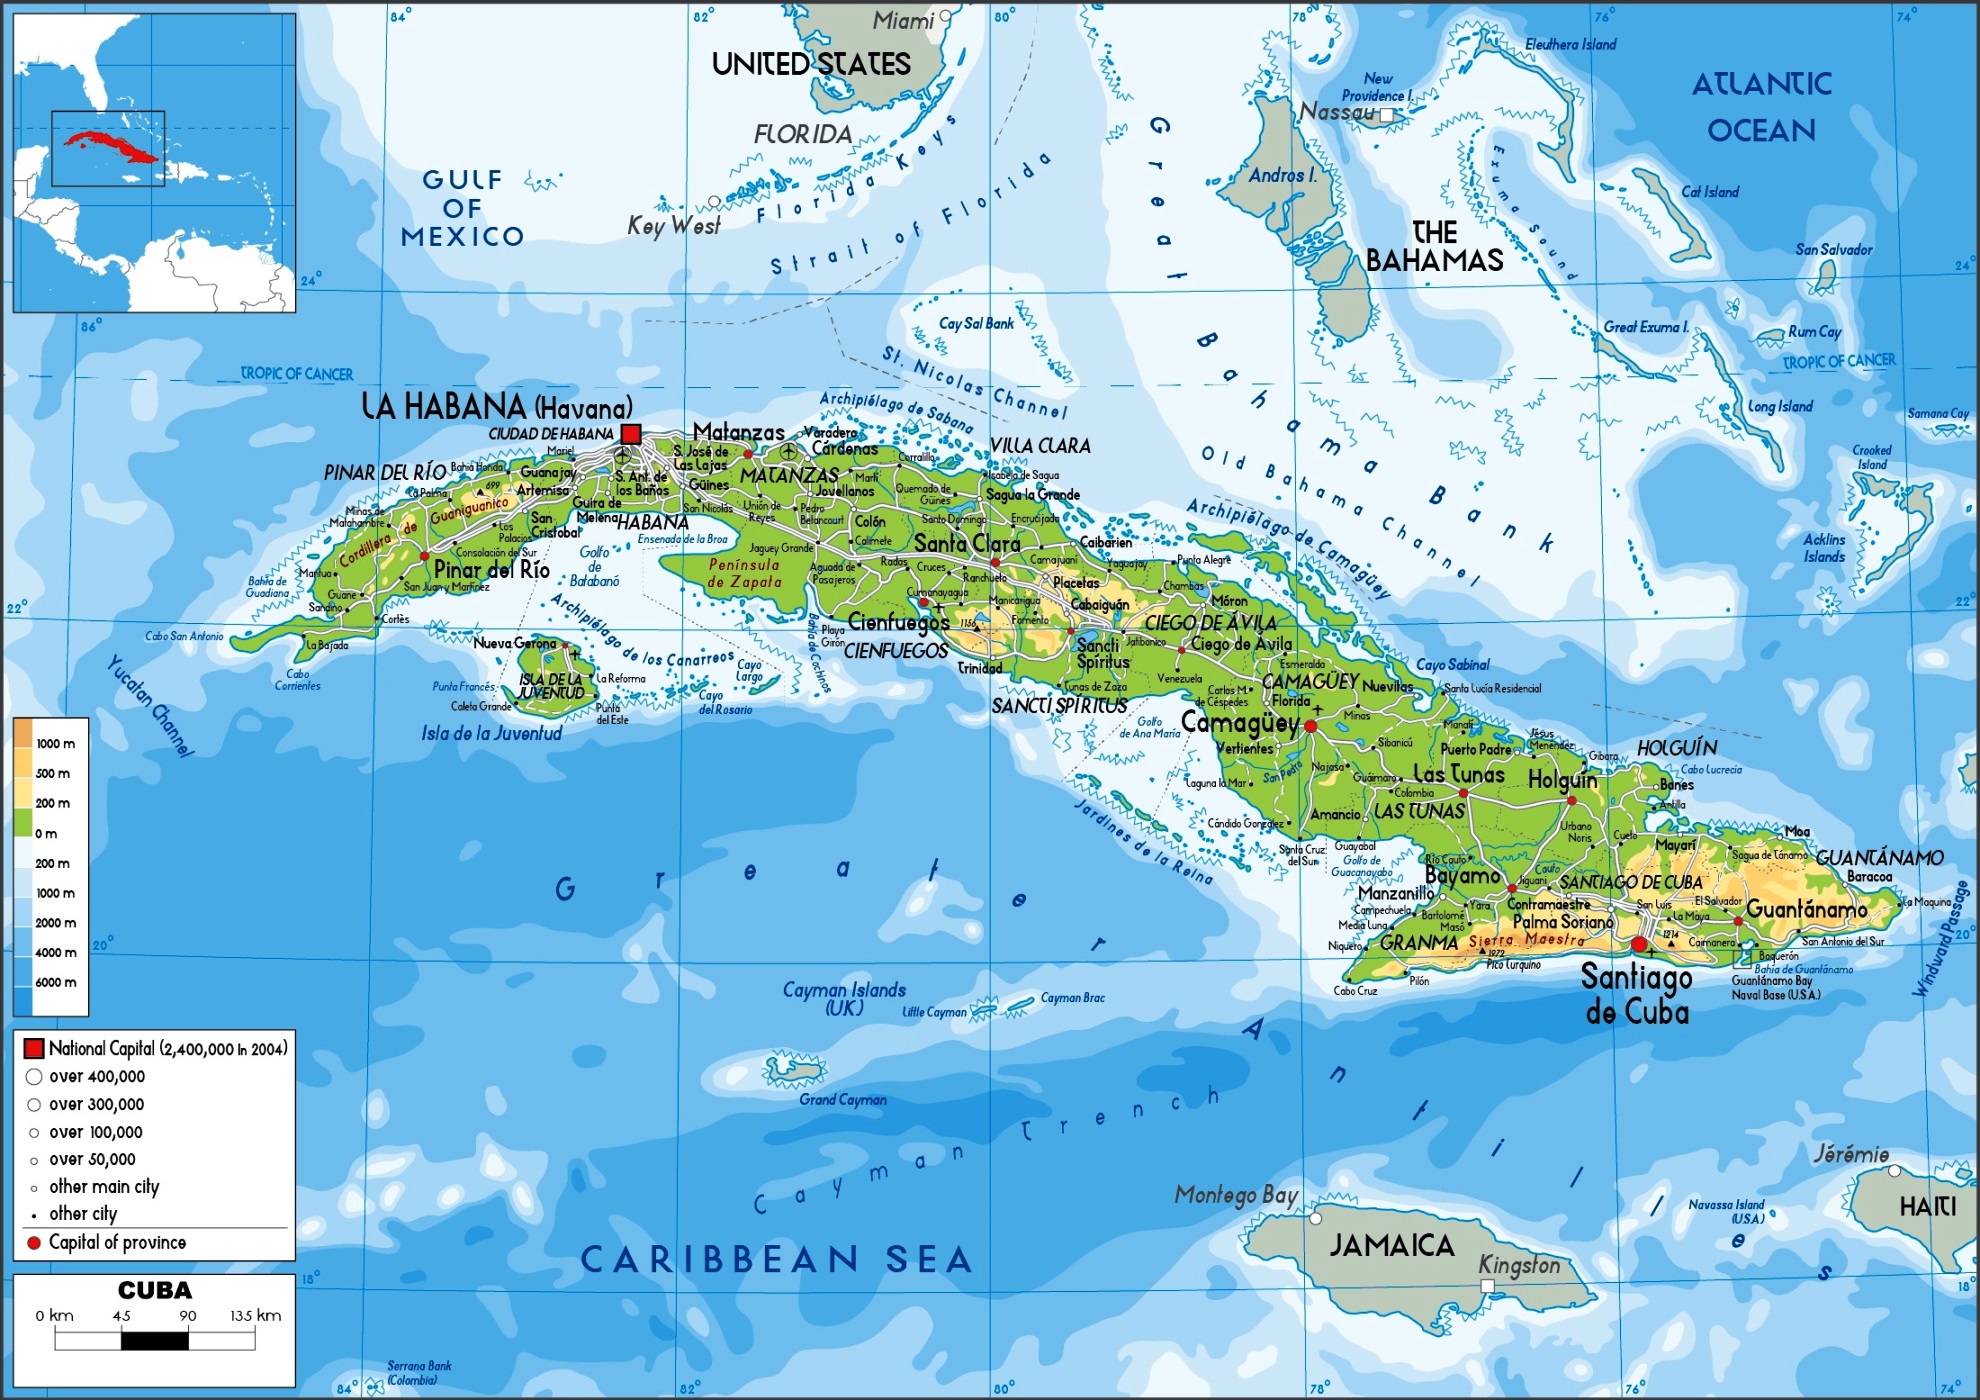 Mapa geográfico de Cuba: geografía, clima, flora, fauna...